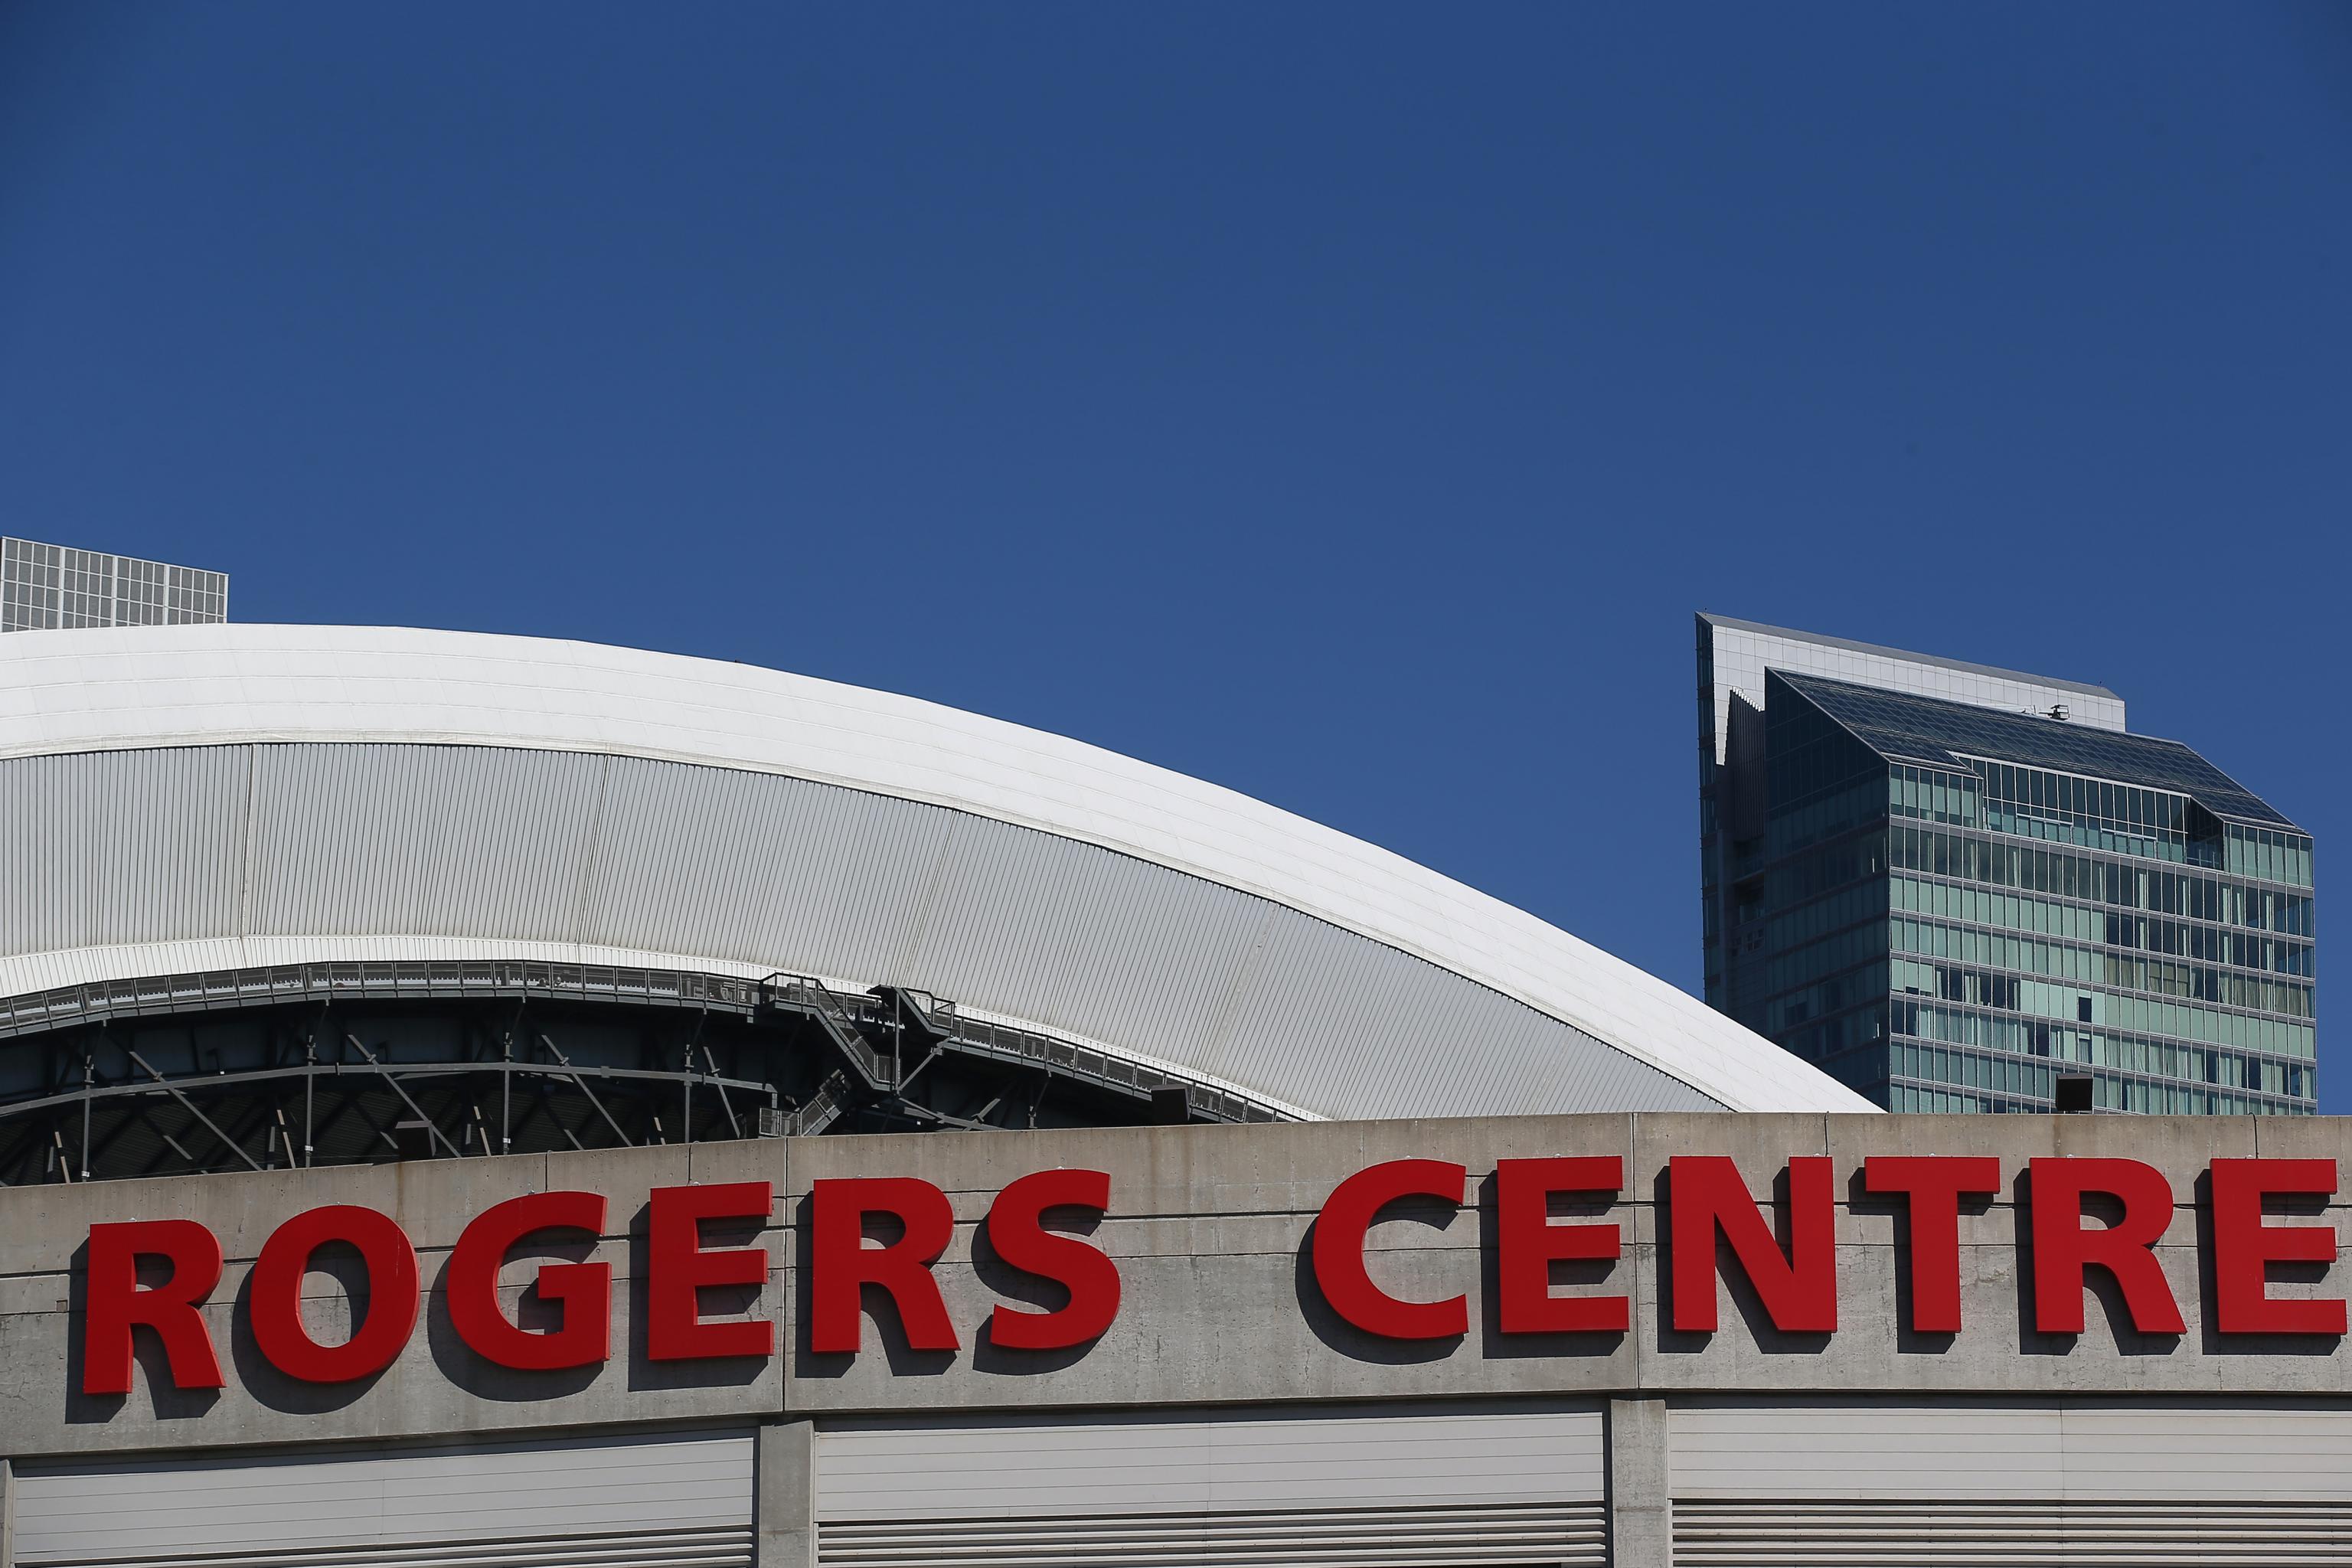 Blue Jays-Royals: Game postponed after ice damages Rogers Centre roof